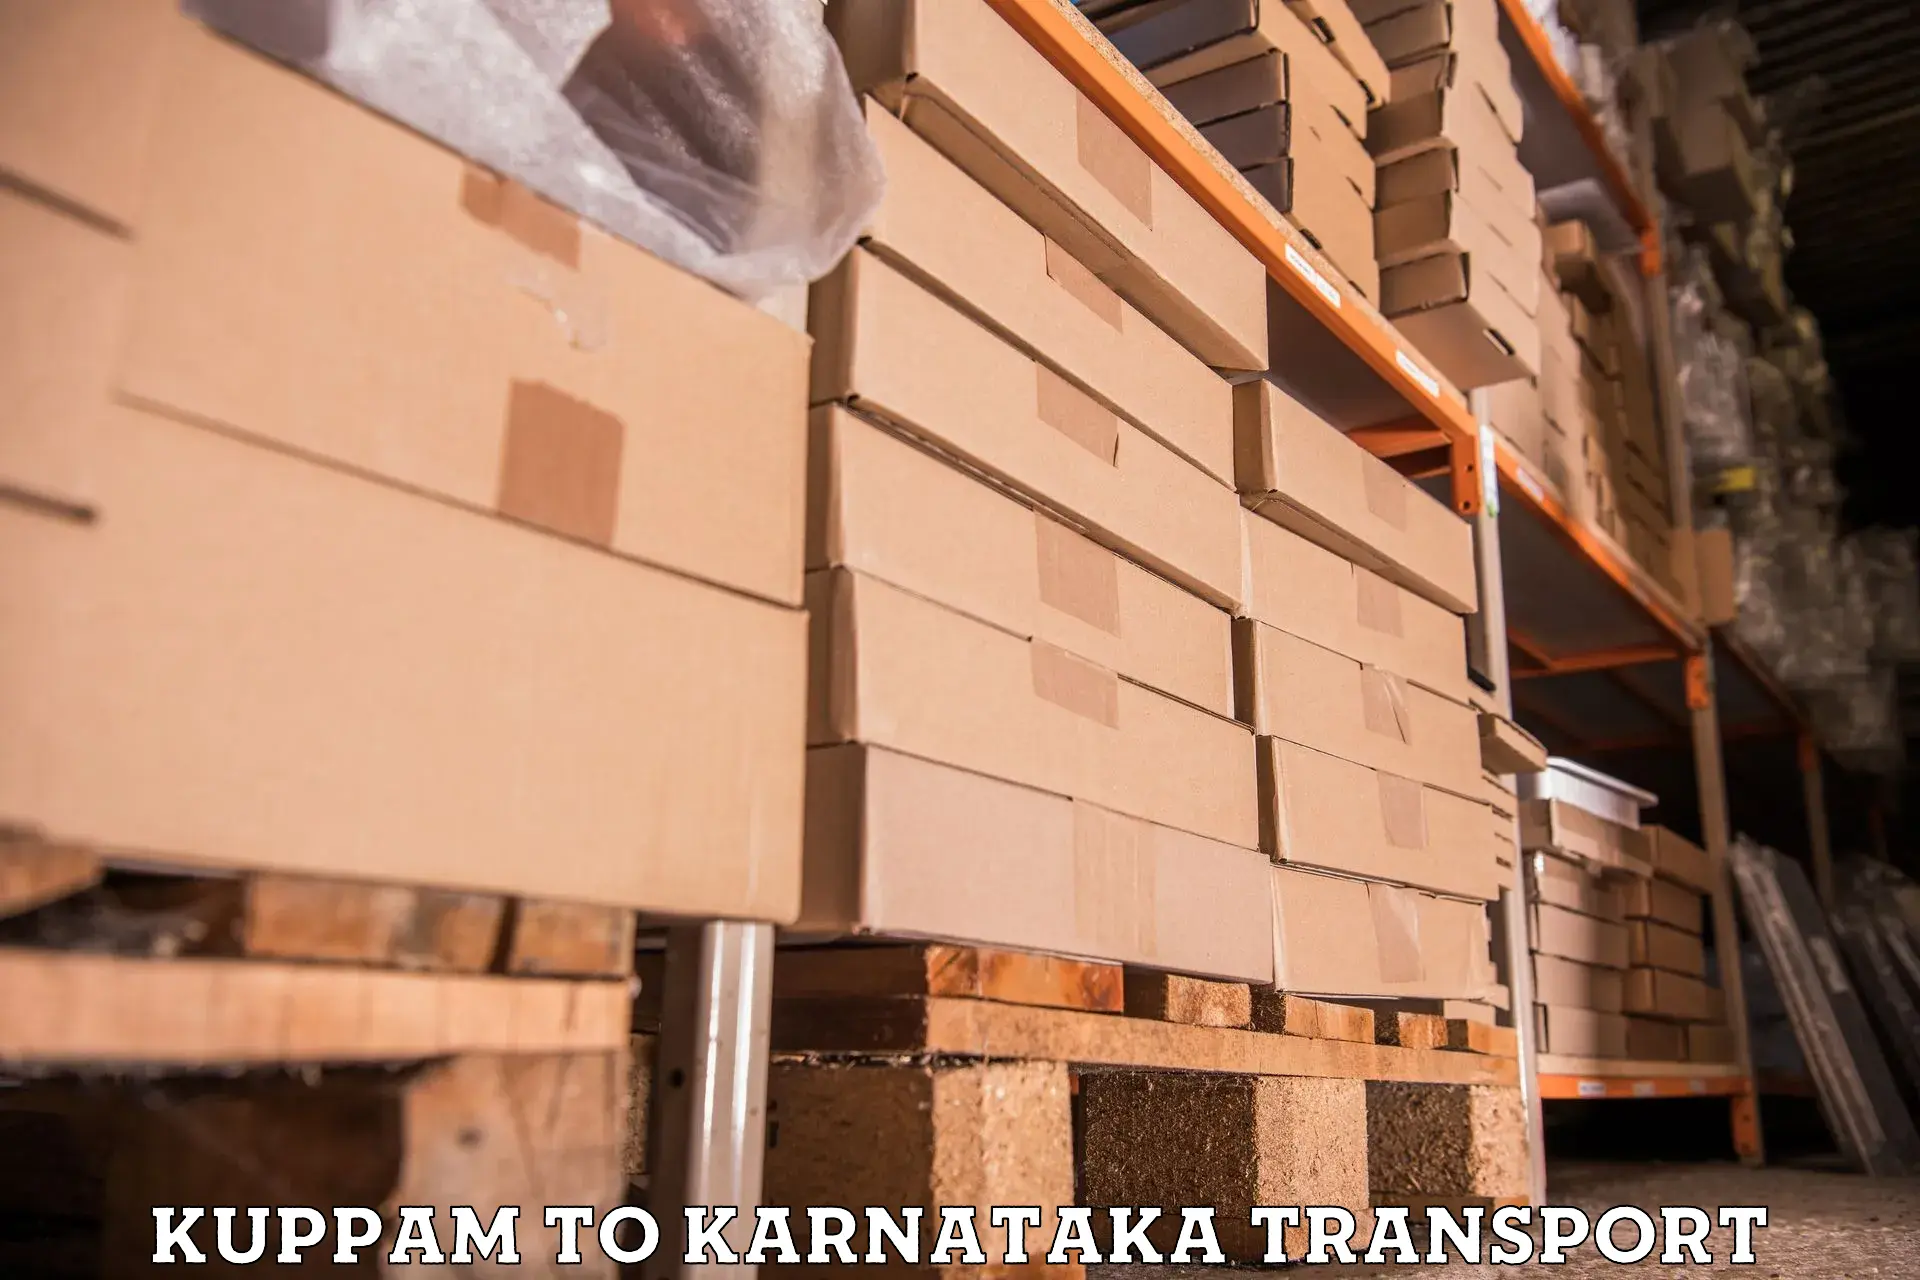 Pick up transport service Kuppam to yedrami